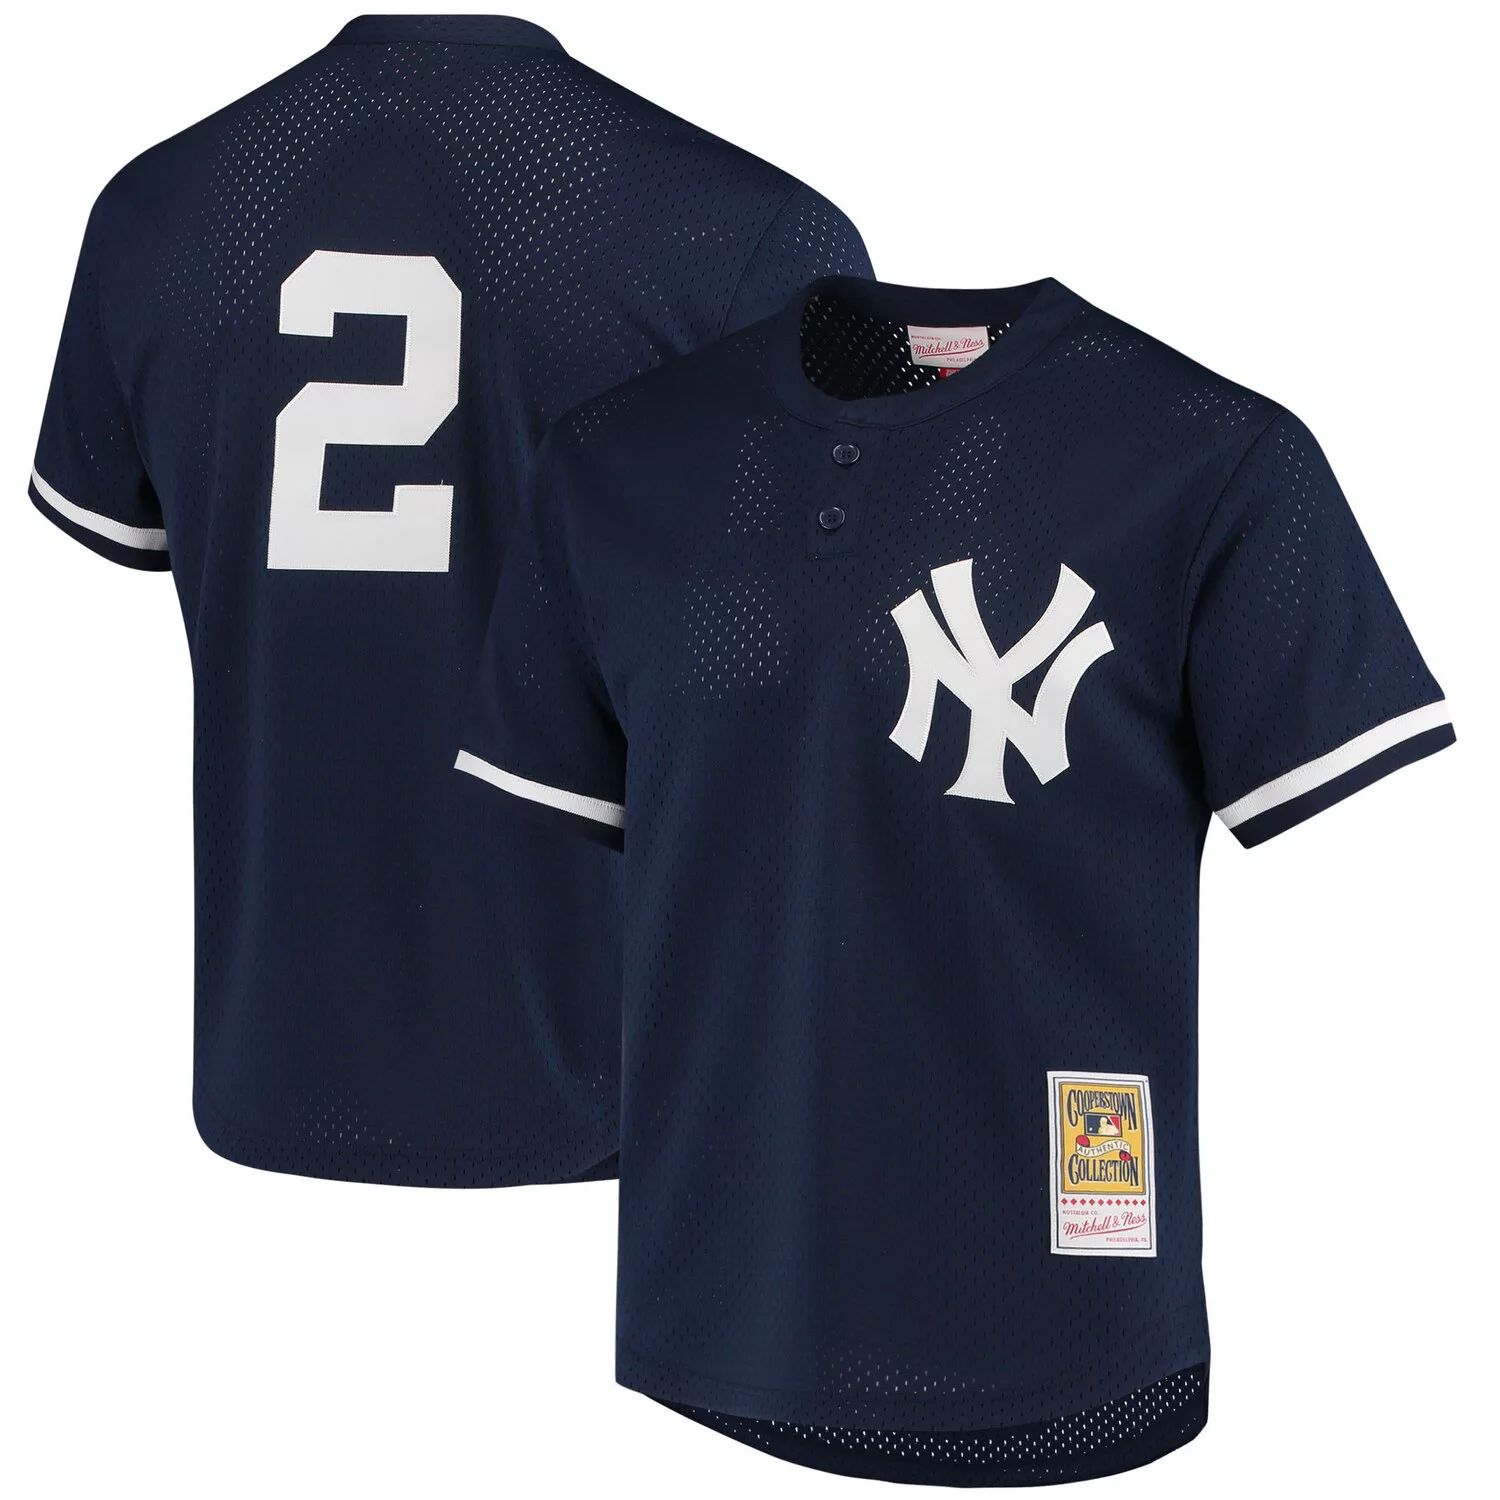 Мужская футболка Mitchell & Ness Derek Jeter Navy New York Yankees Cooperstown Collection 1995 года, тренировочная майка